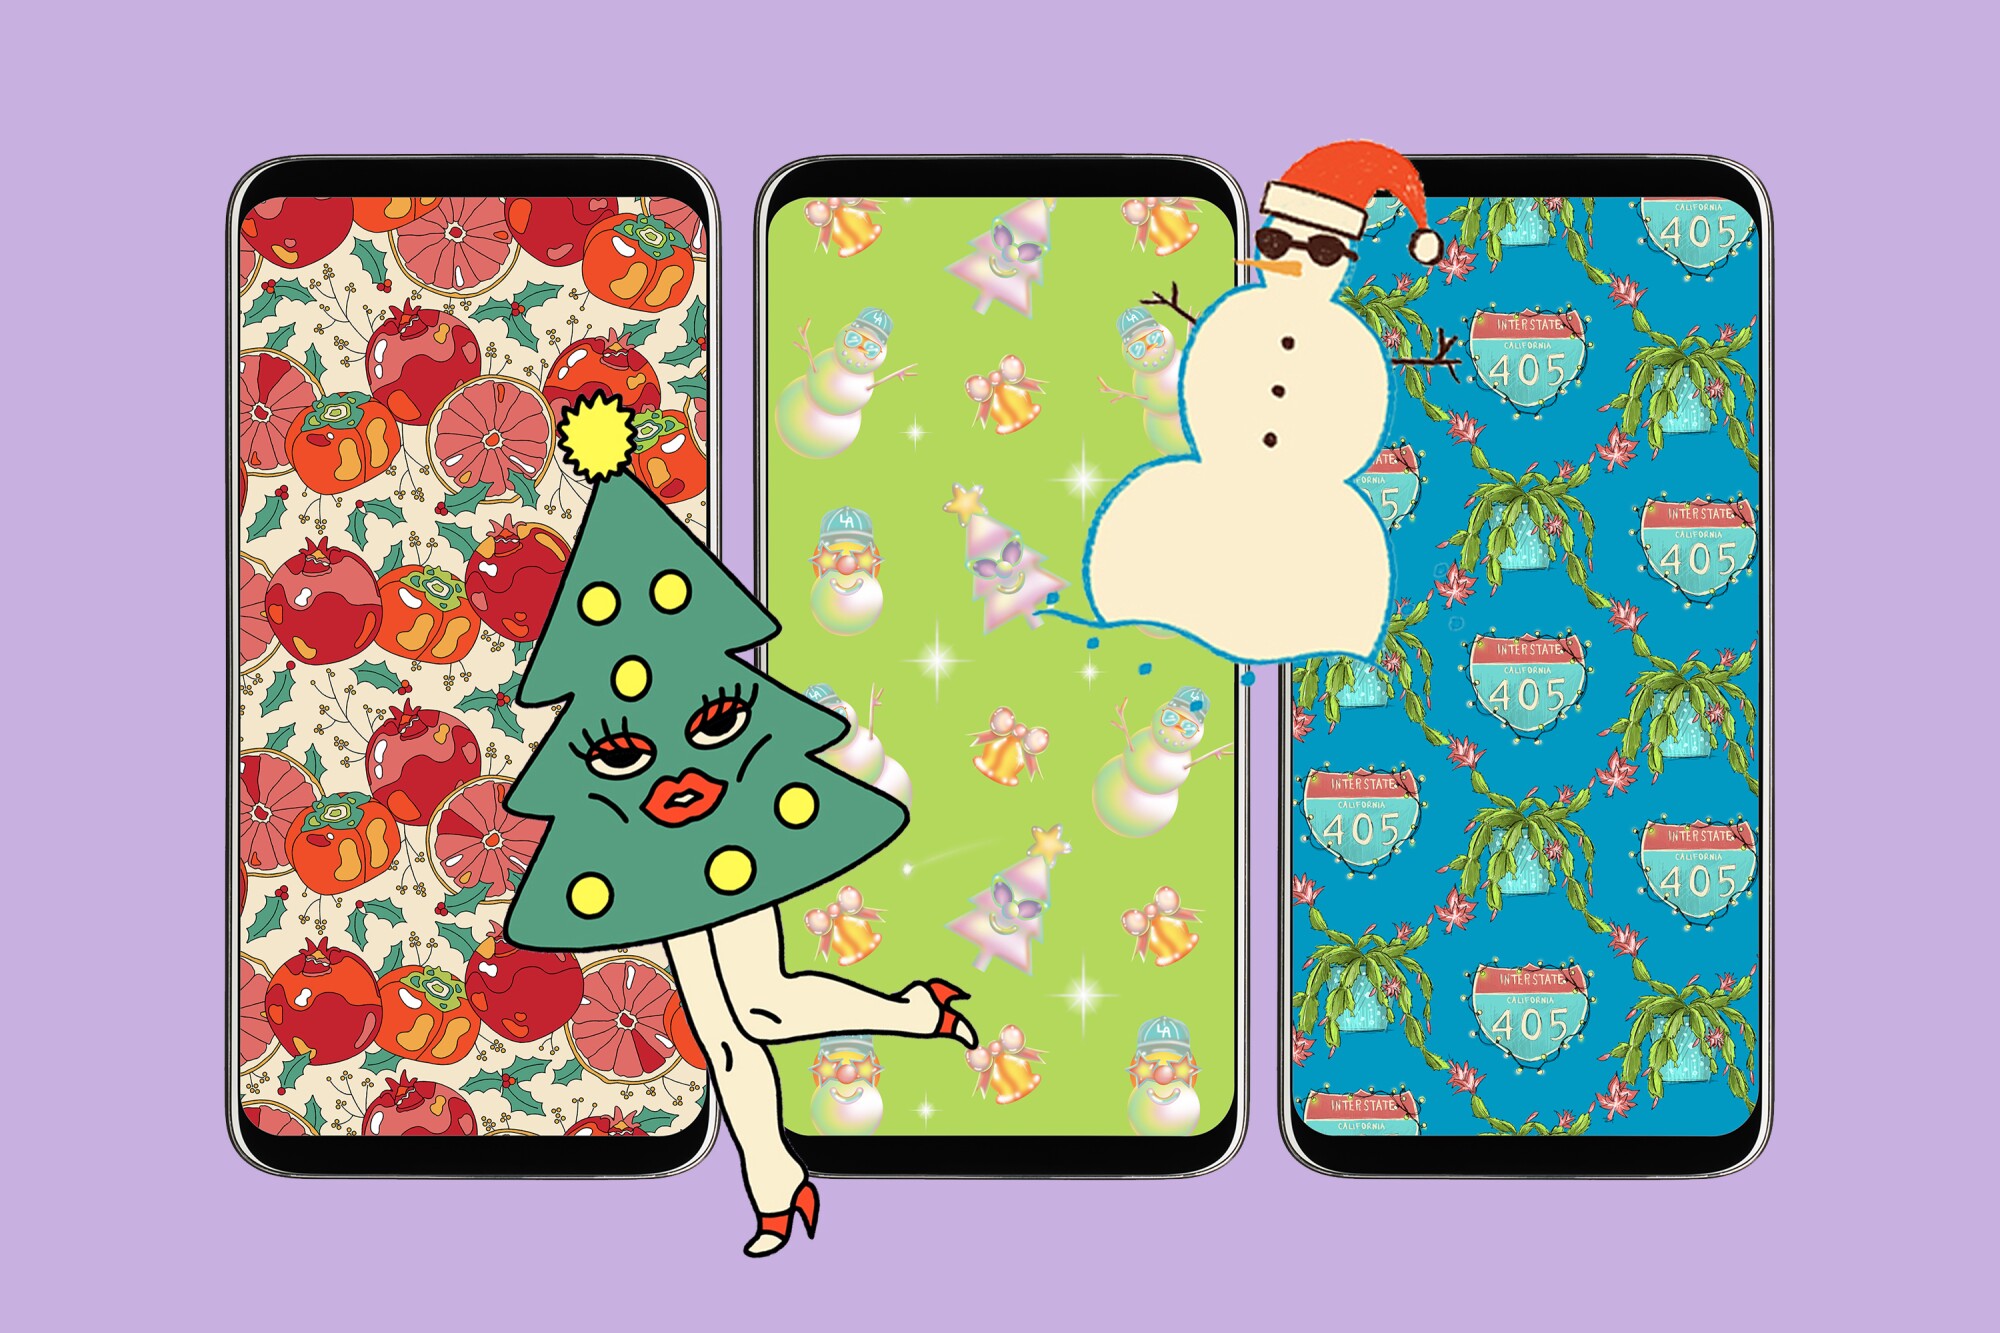 Illustration of festive phone backgrounds